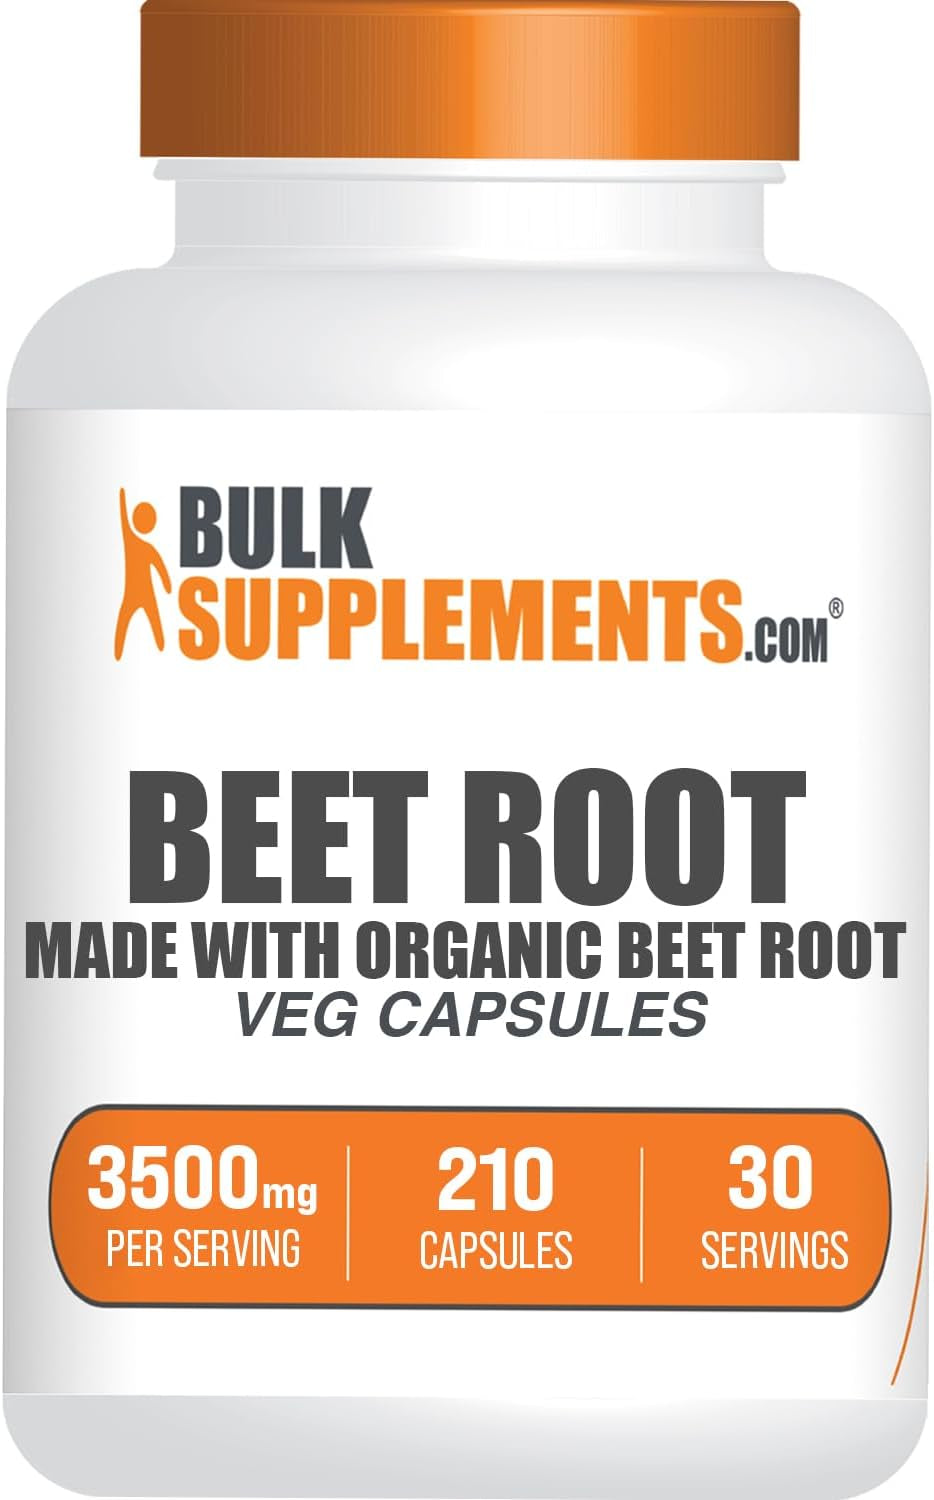 BULKSUPPLEMENTS.COM Beet Root Capsules - Beetroot Supplement, Beet Root Pills - Superfood Supplement, Vegan & Gluten Free, 7 Capsules per Serving, 30-Day Supply, 210 Veg Capsules